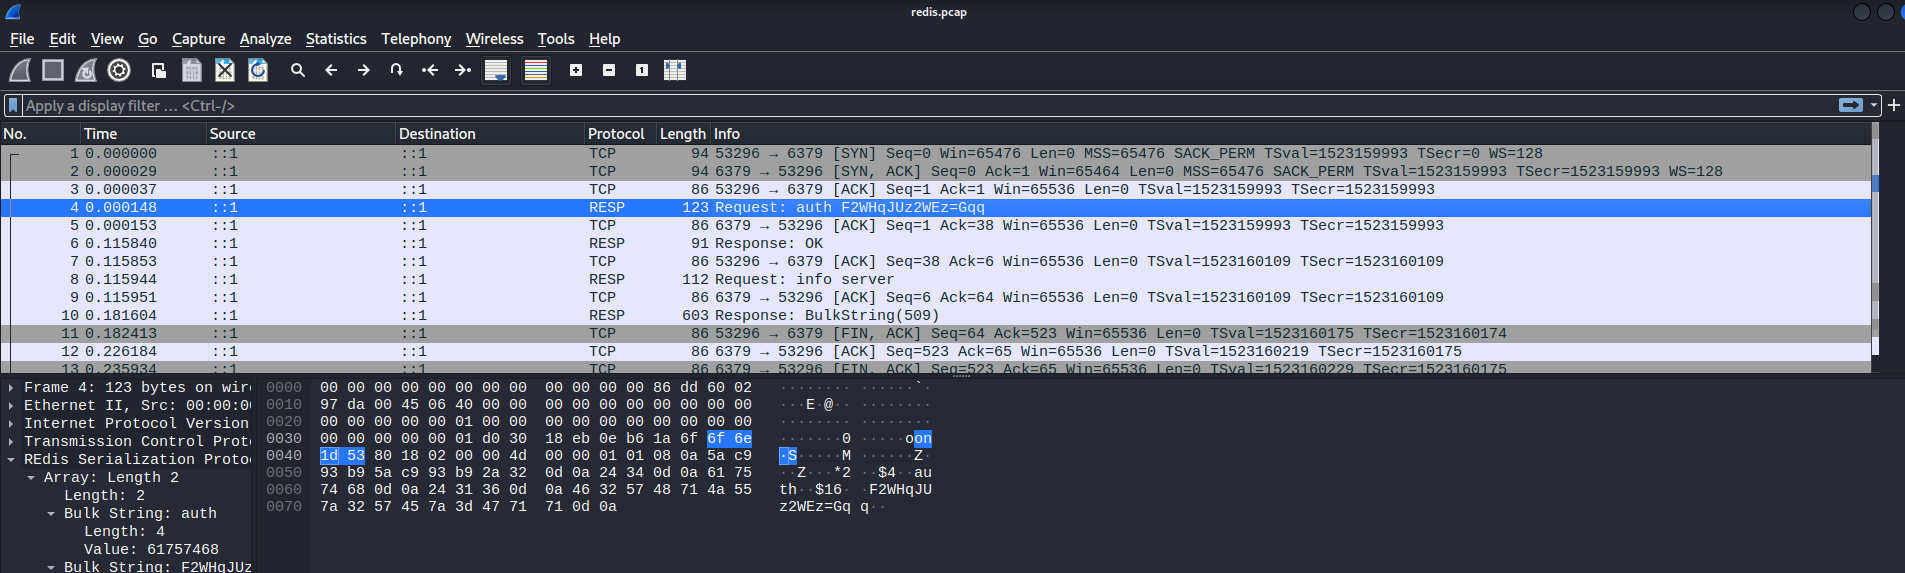 Screenshot of the Wireshark output